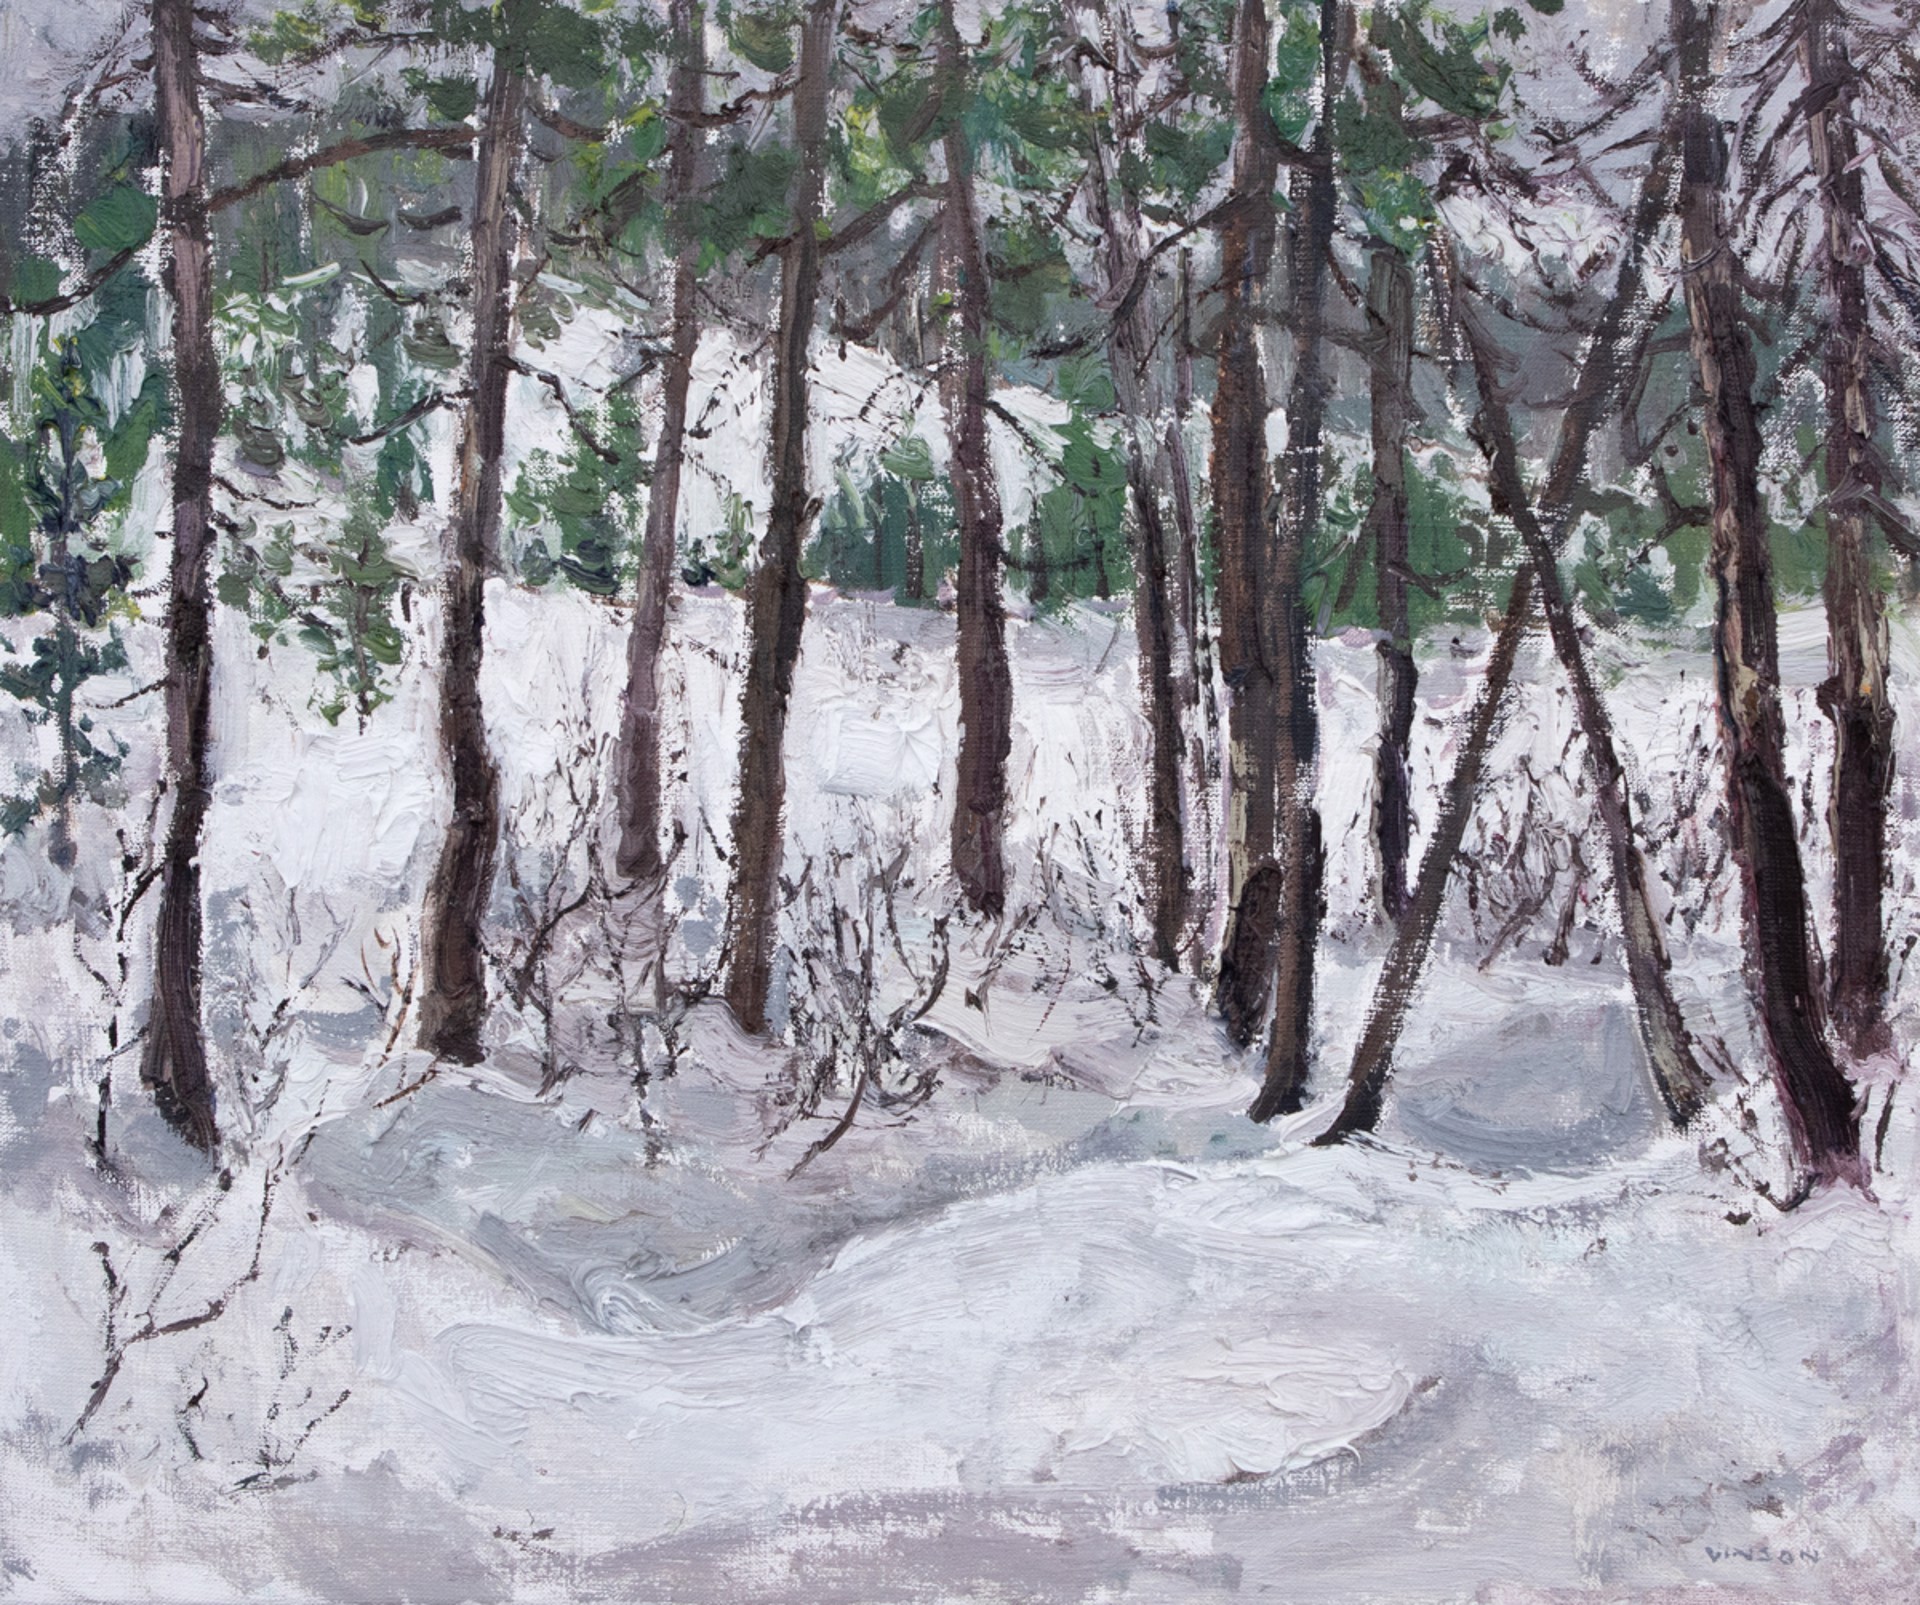 Winter Along Joseph Creek by Turner Vinson